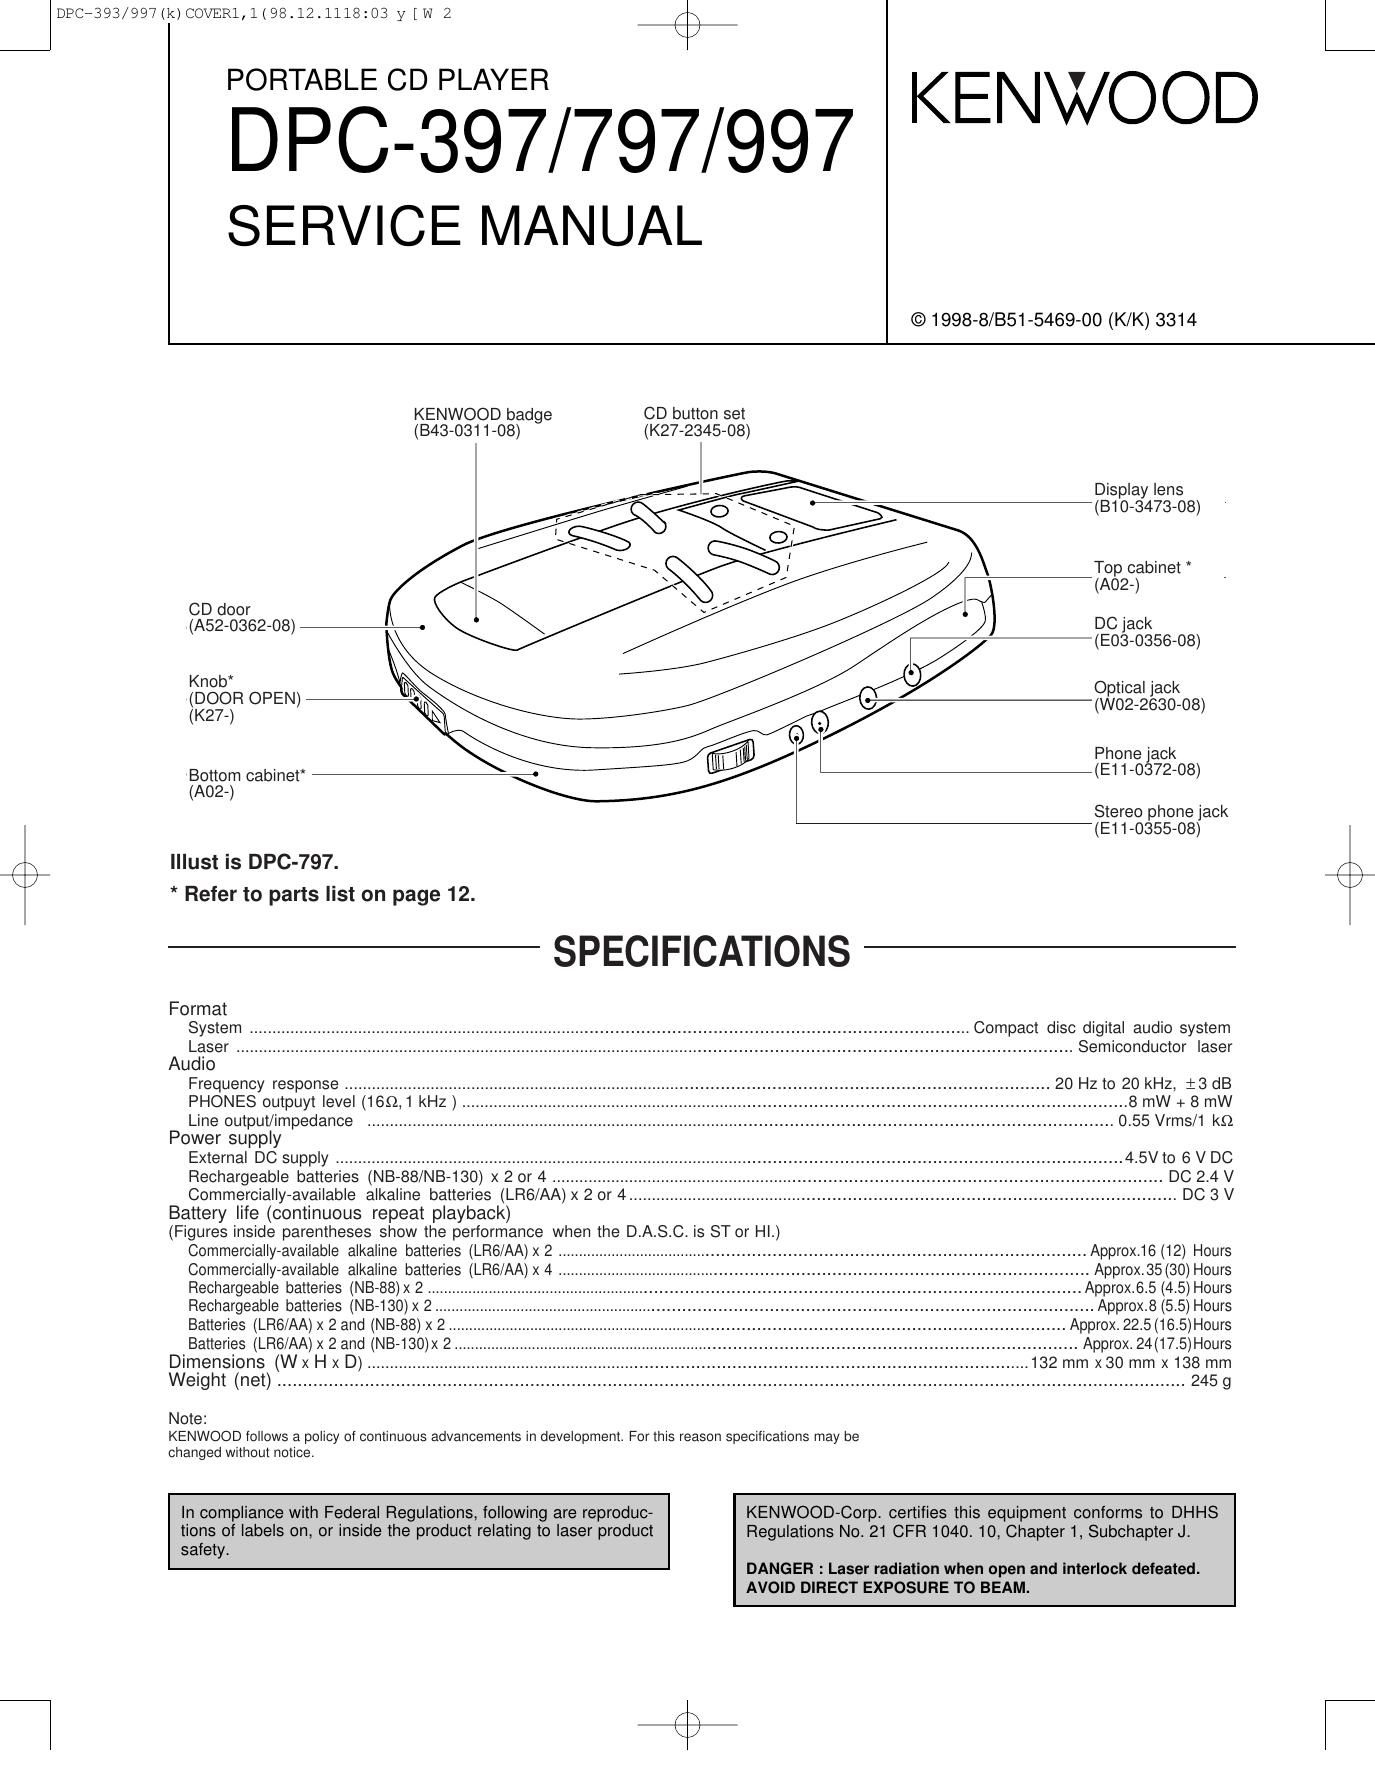 Kenwood DPC 797 Service Manual